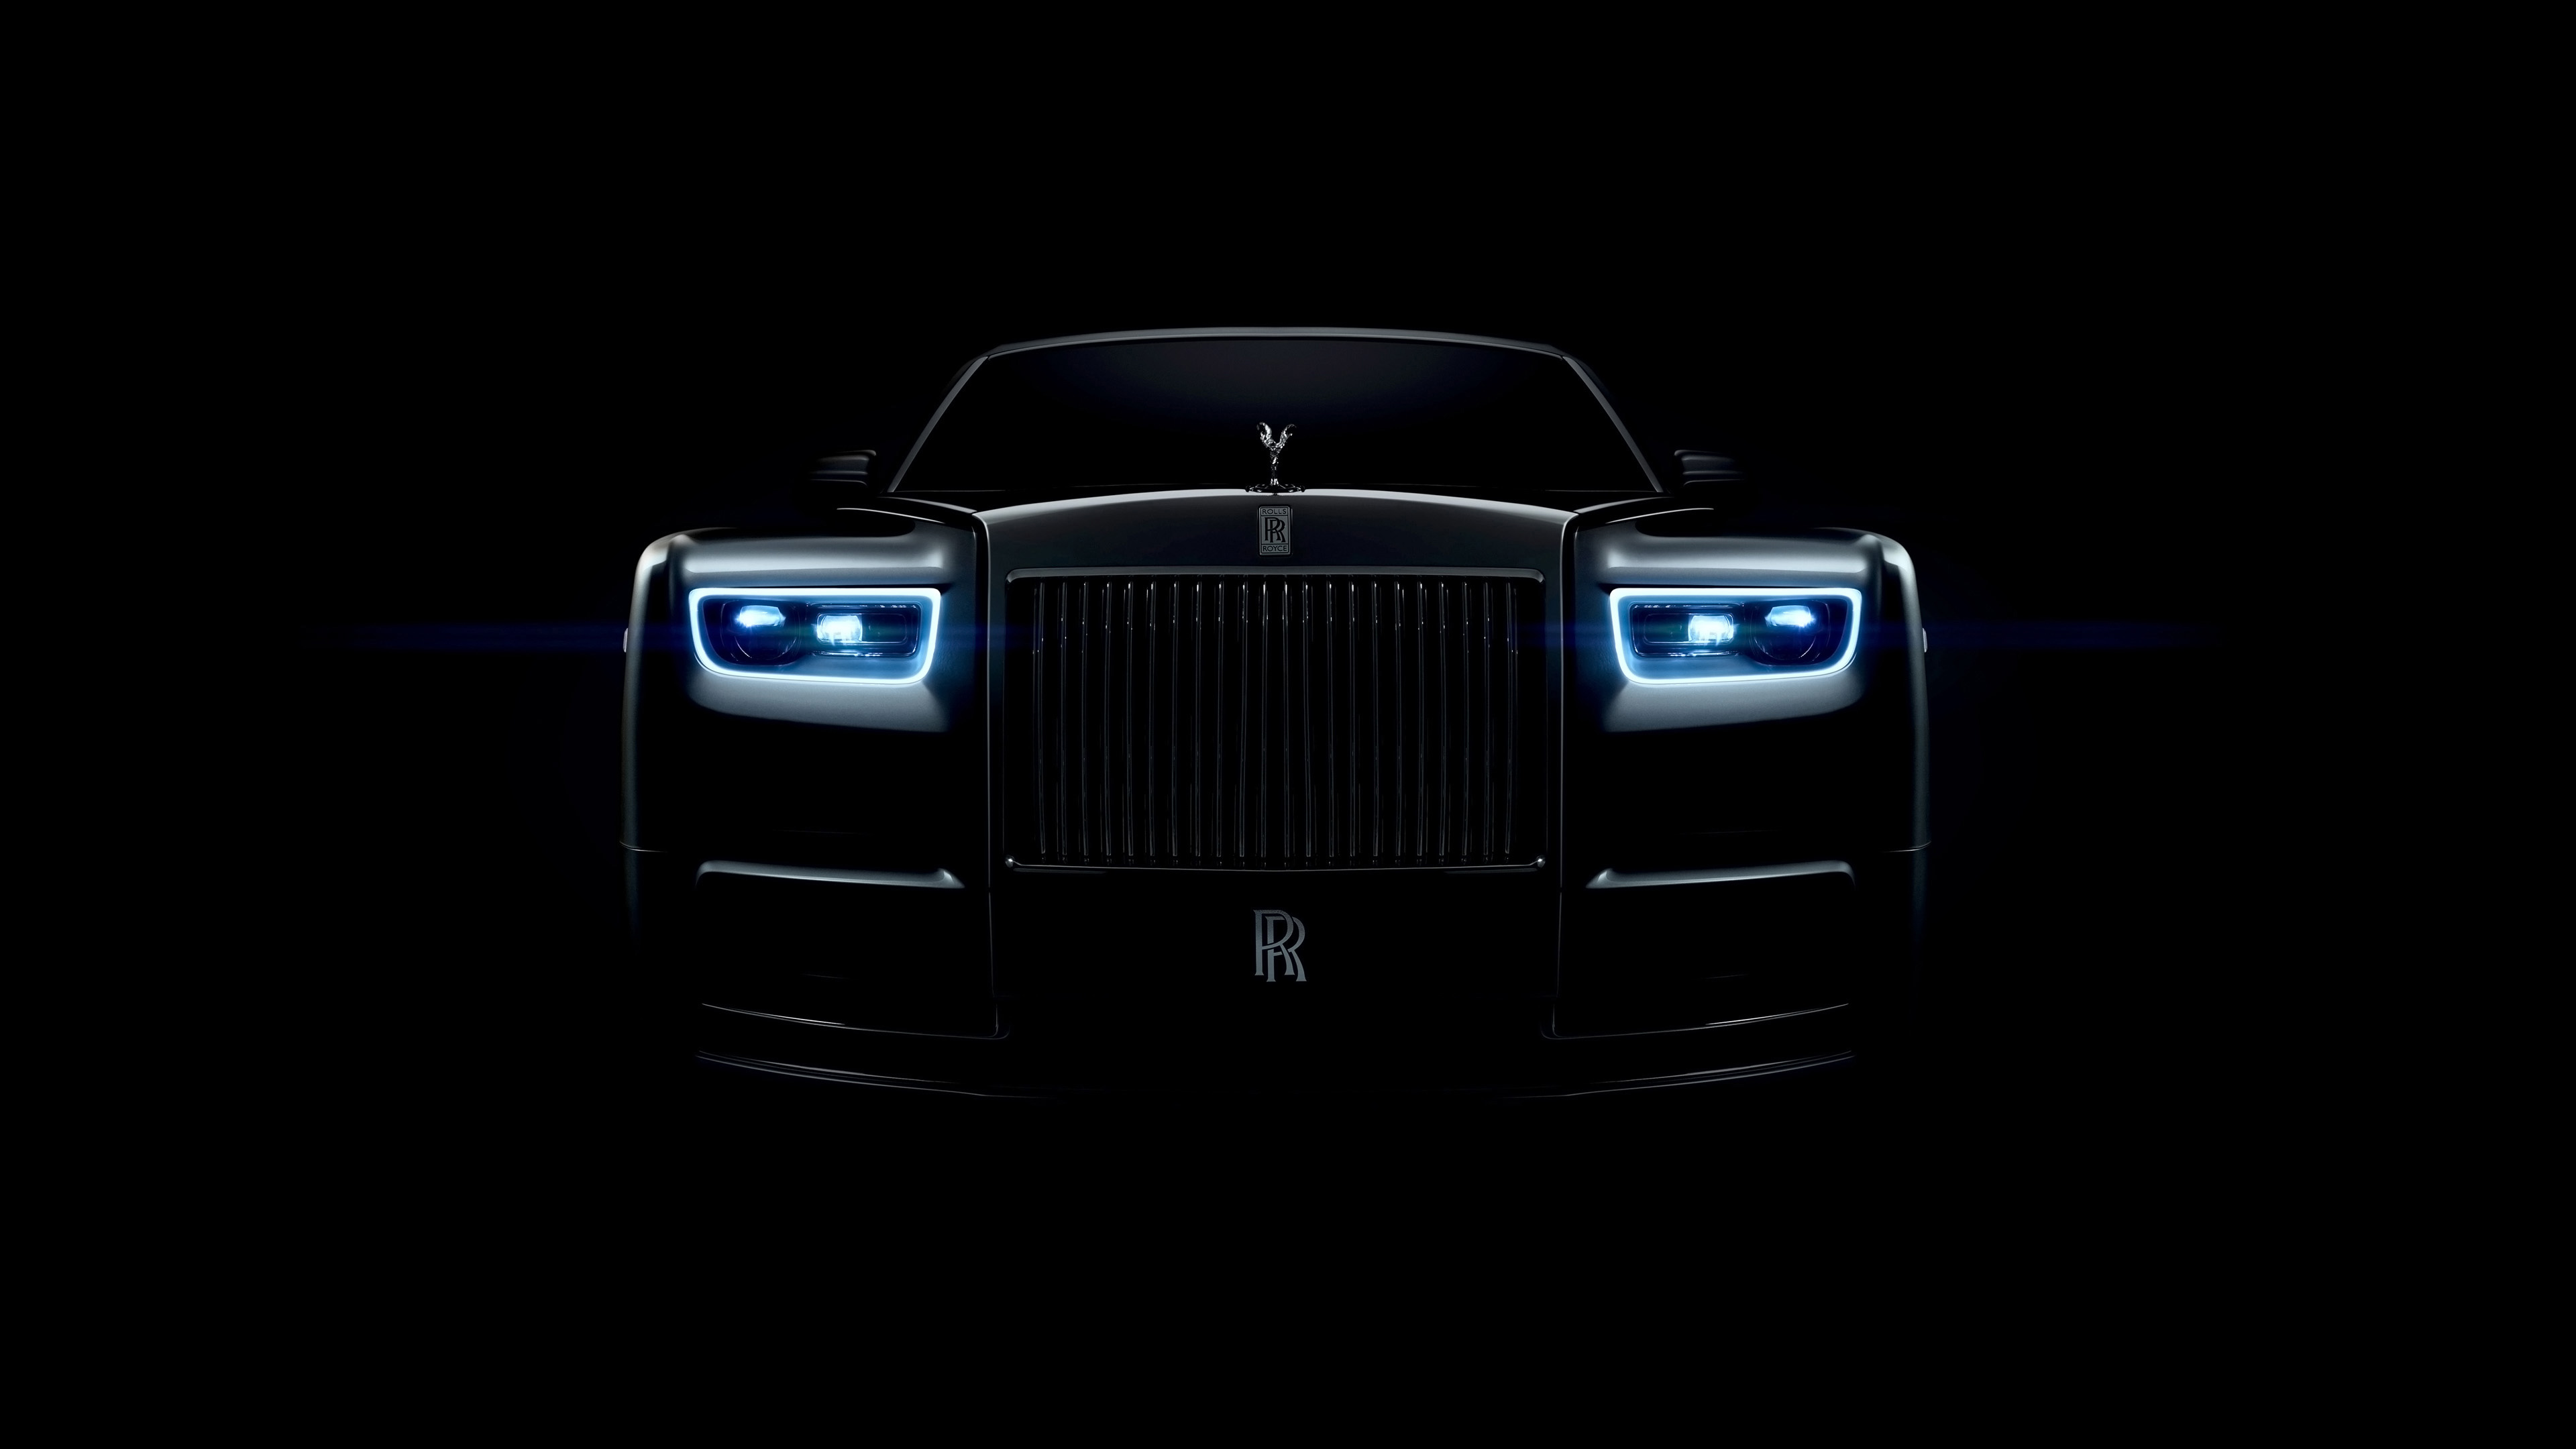 29+] Rolls-Royce Wraith Wallpapers - WallpaperSafari